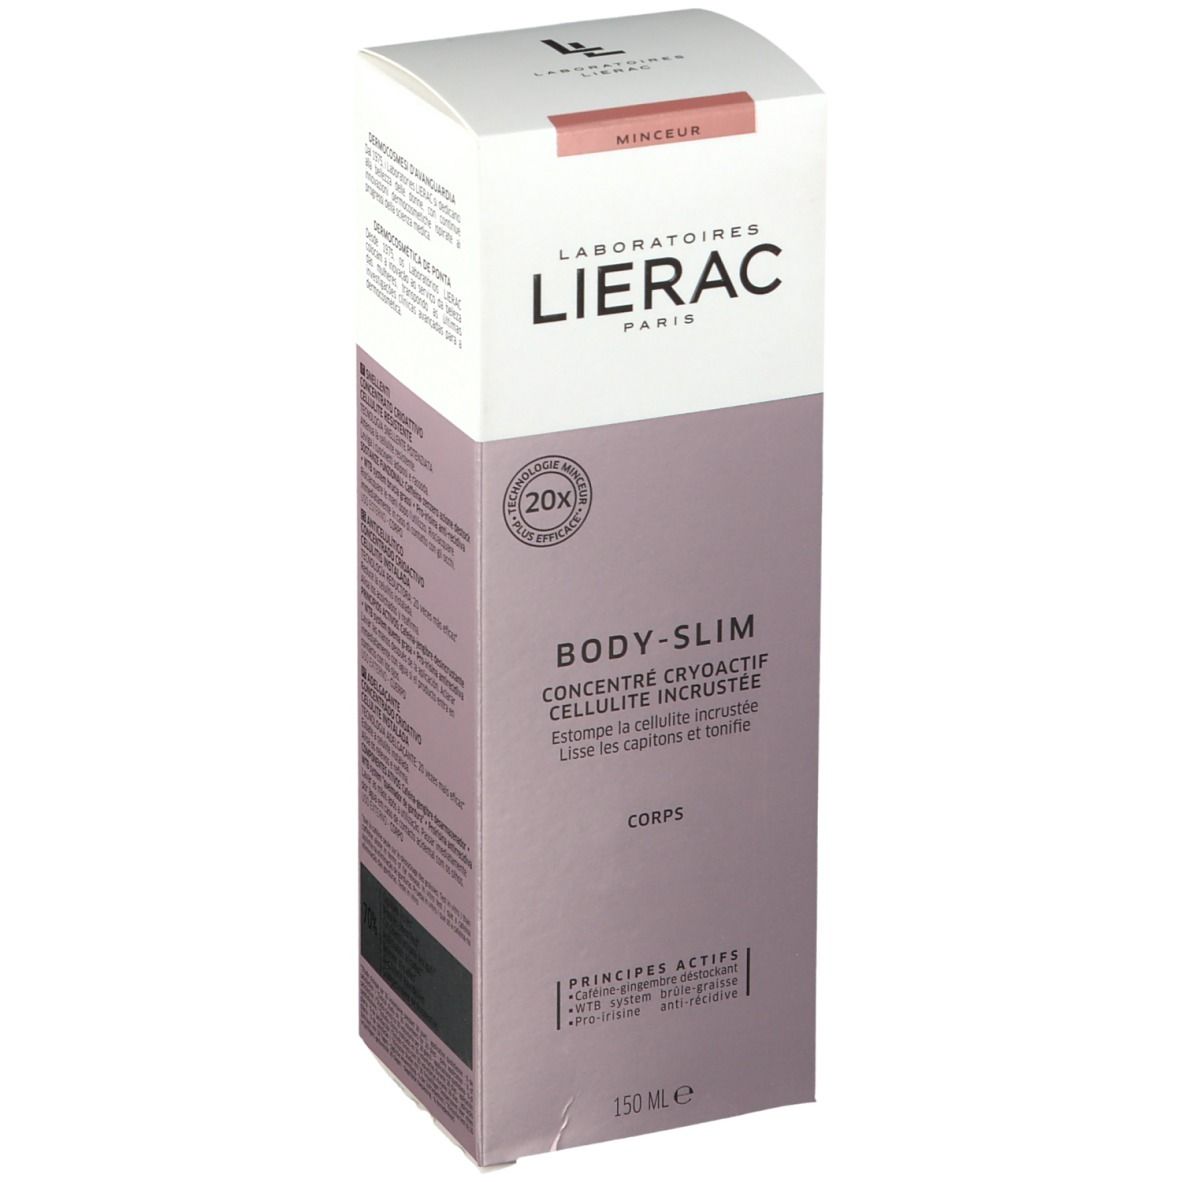 LIERAC BODY-SLIM Concentré Cryoactif Cellulite Incrustée